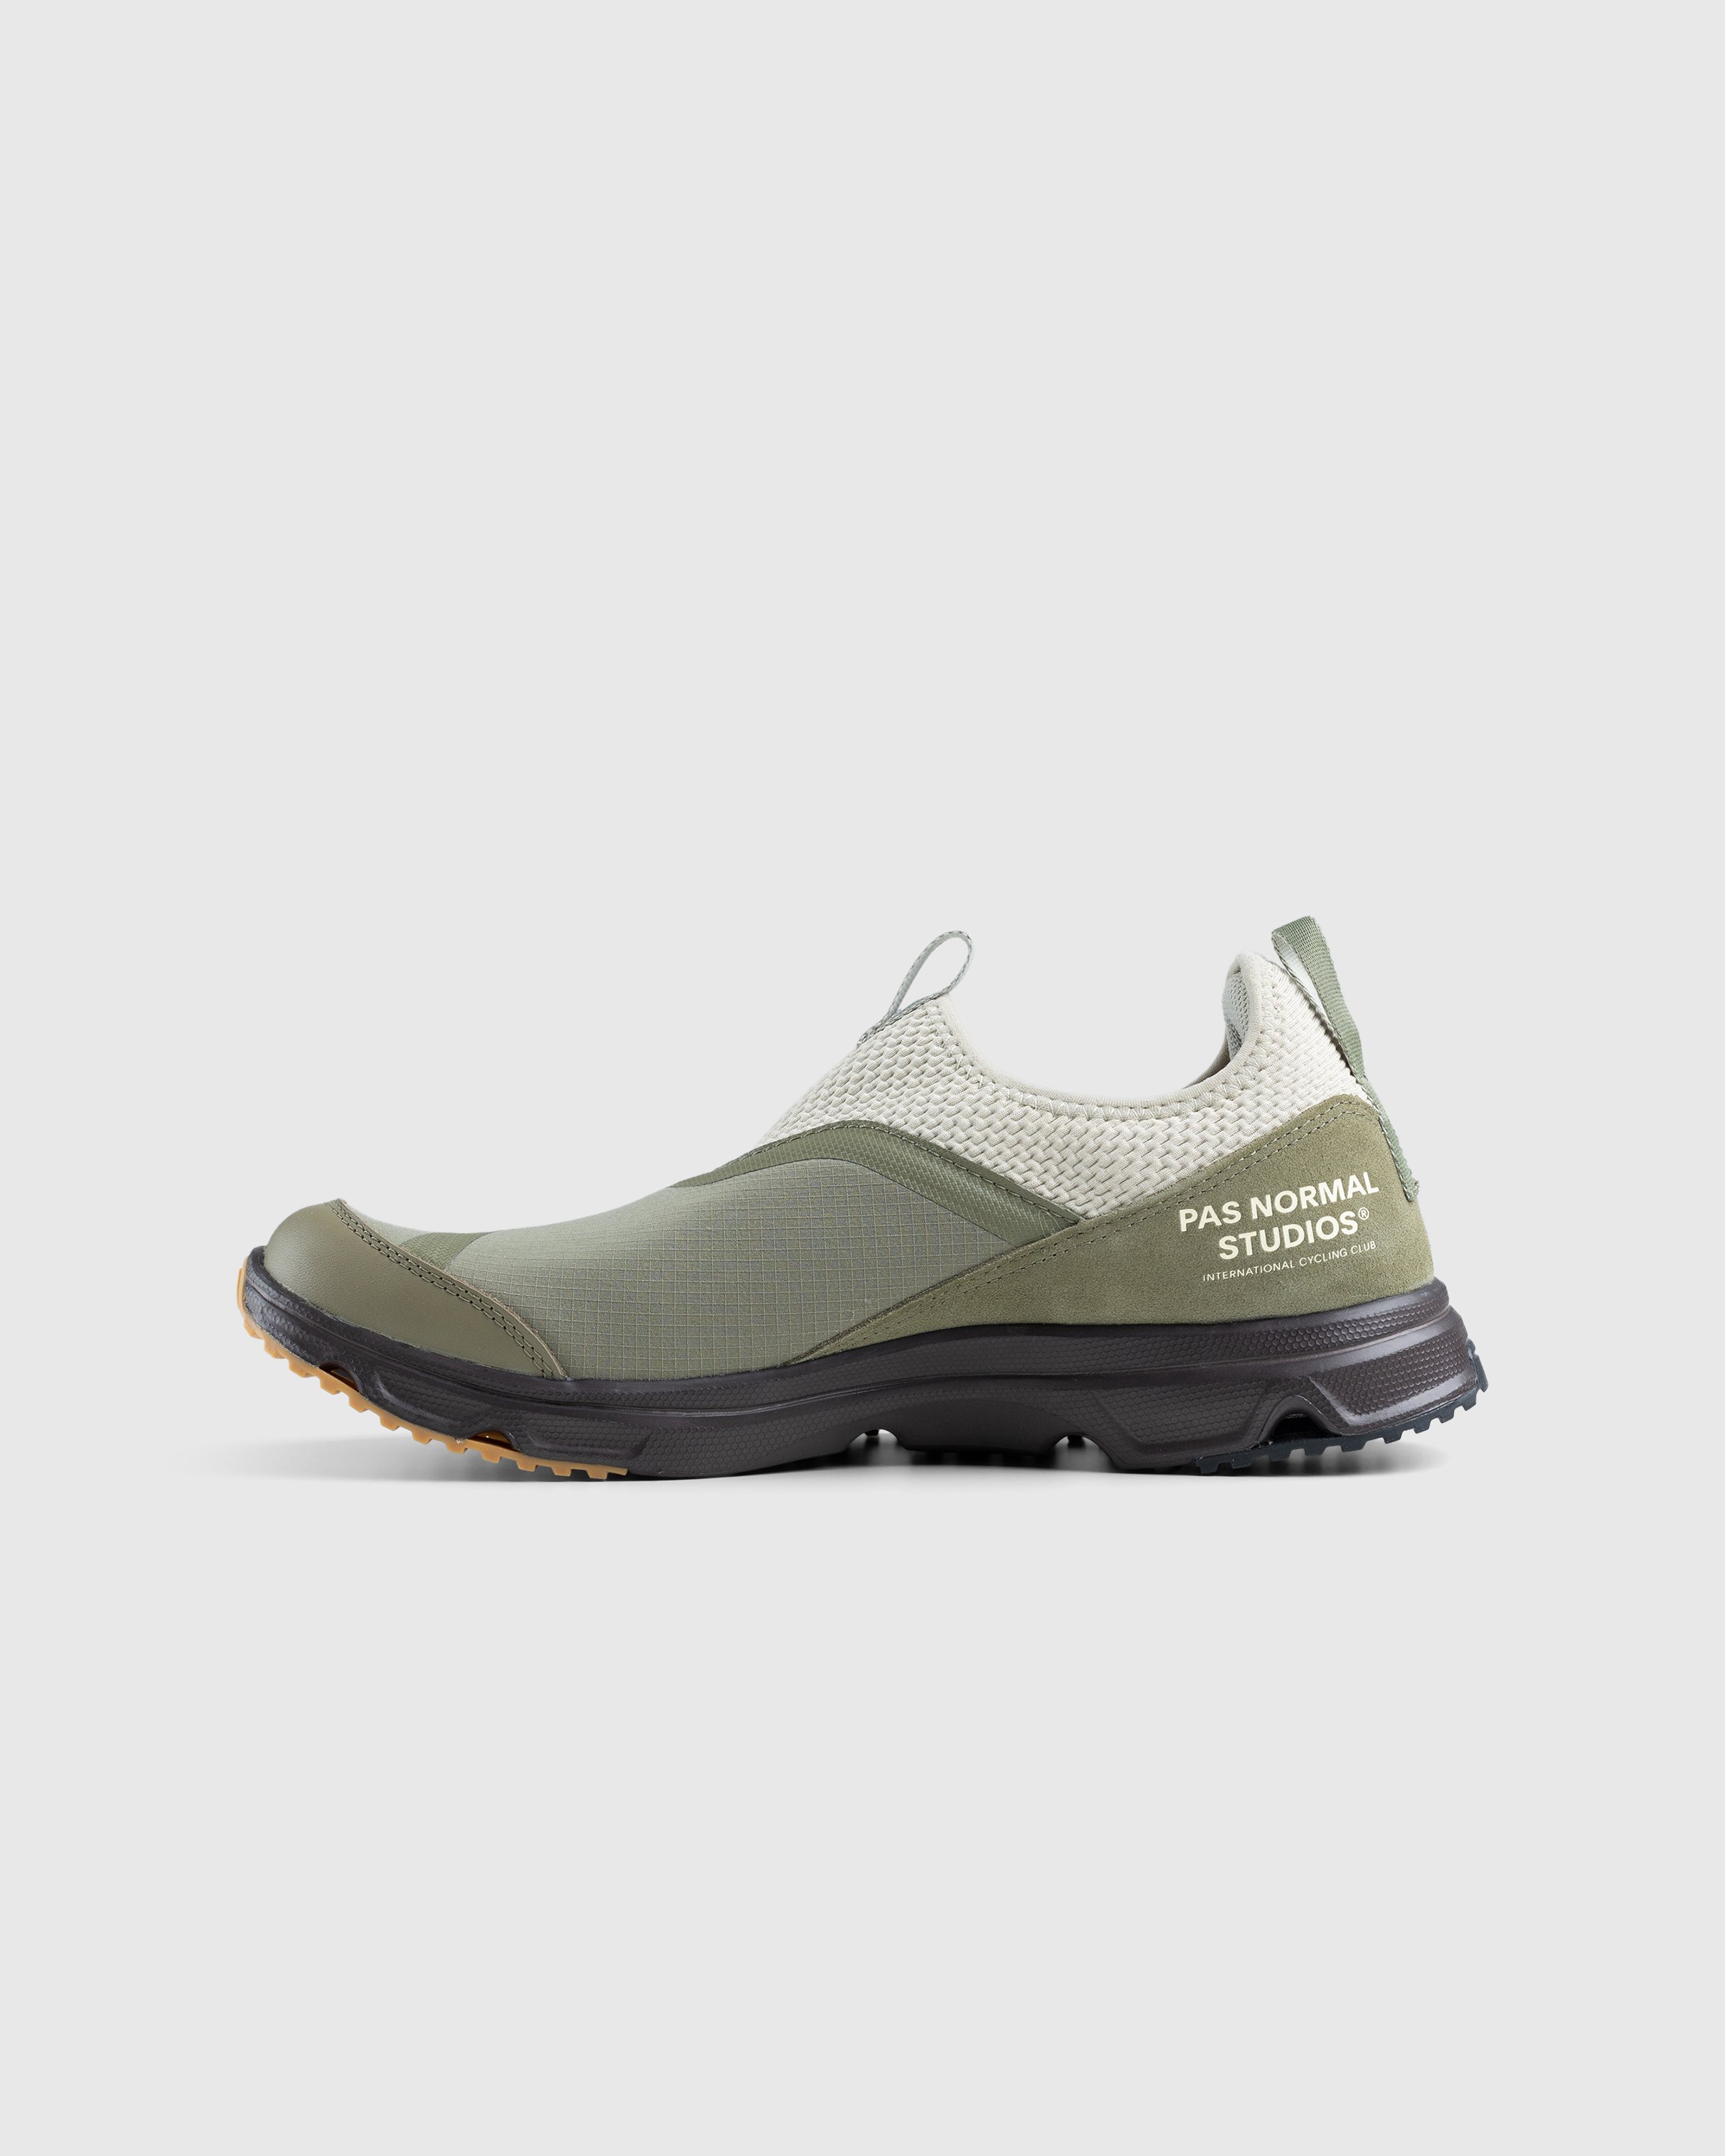 Salomon x PAS NORMAL STUDIOS - RX Snug Moss Grey/Deep Lichen Green/Black Coffee - Footwear - Green - Image 2